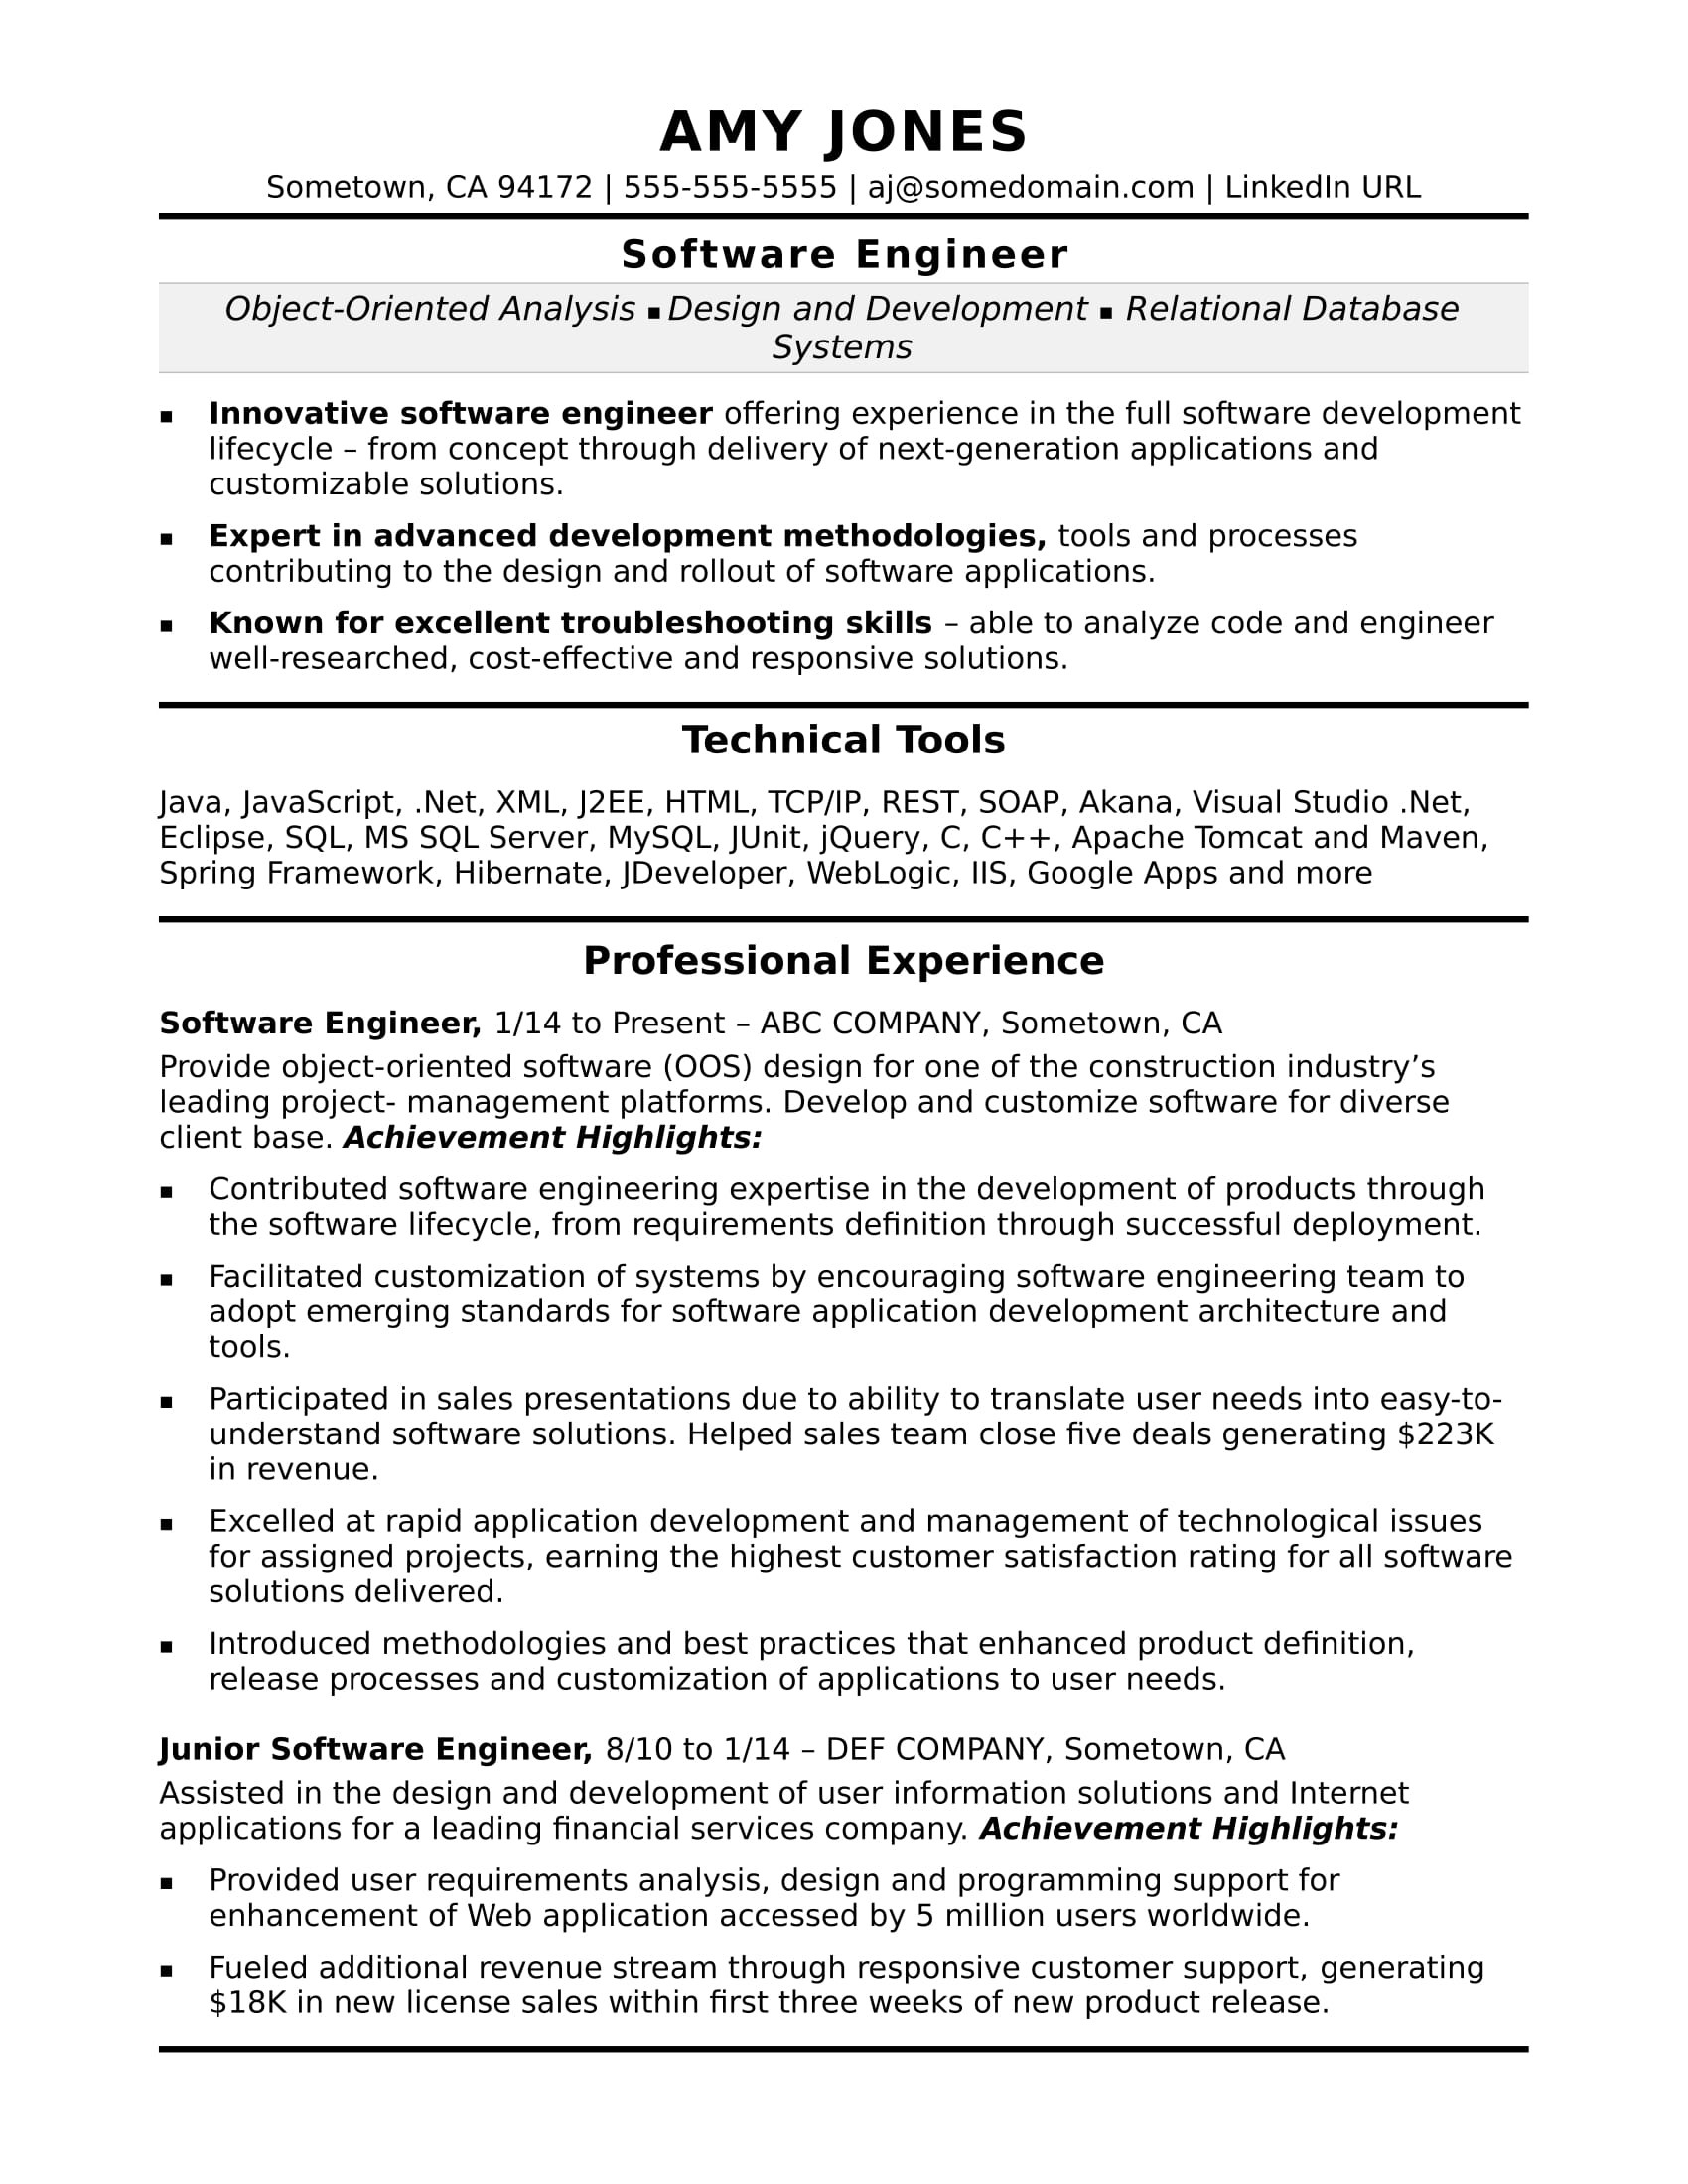 Software Engineer New Grad Resume Sample software Engineer Resume Monster.com